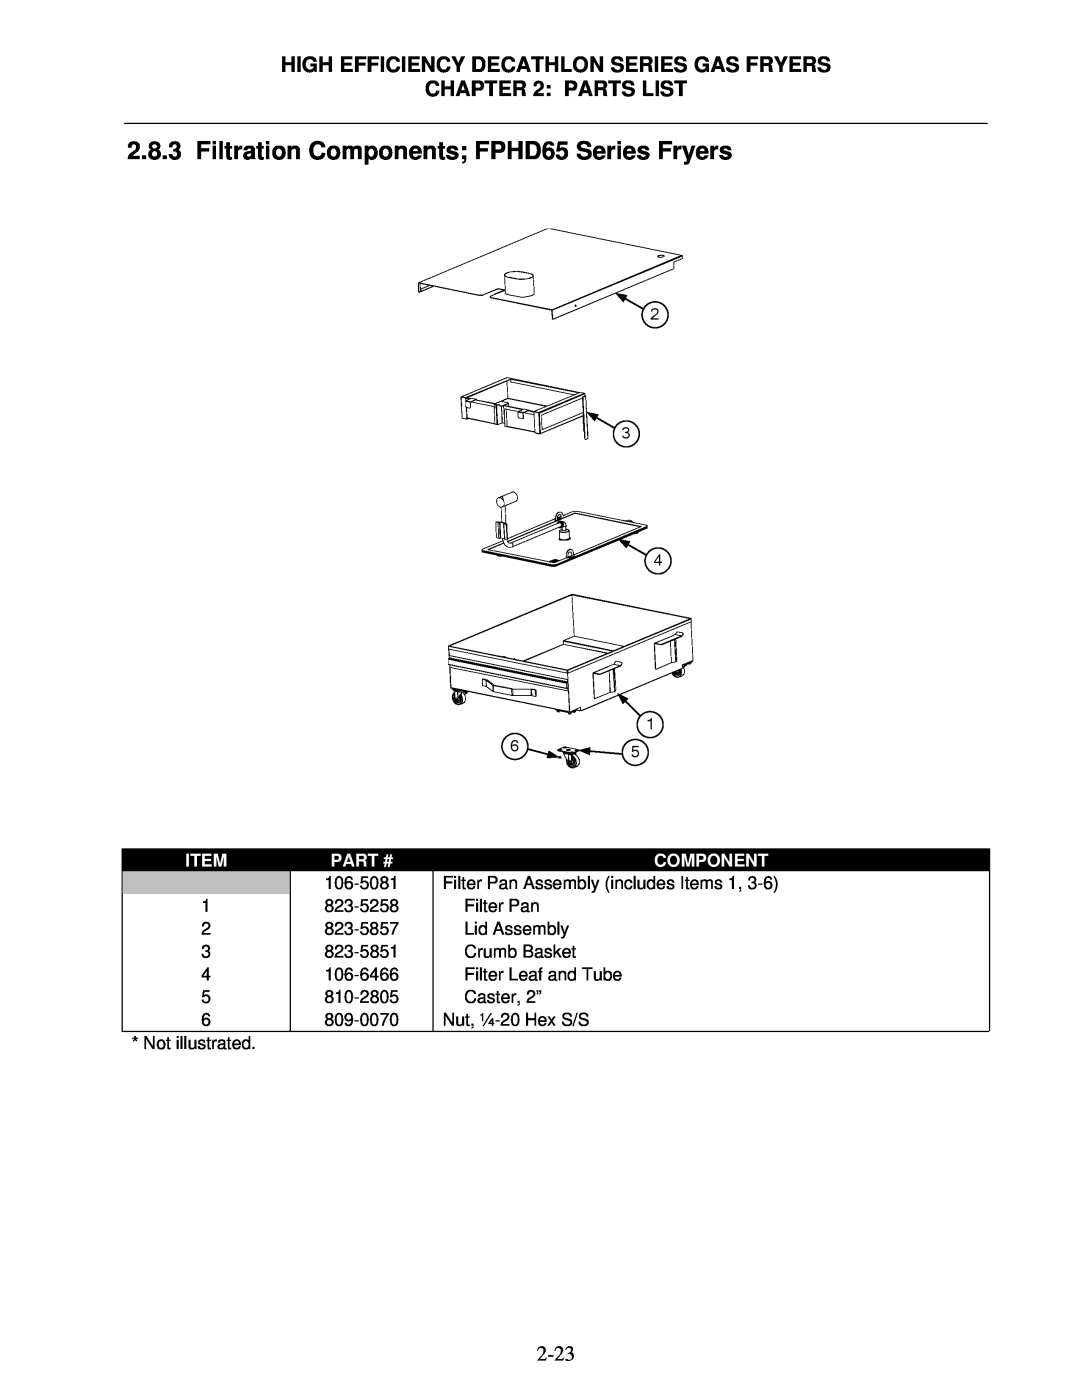 Frymaster Filtration Components; FPHD65 Series Fryers, High Efficiency Decathlon Series Gas Fryers, Parts List, Item 